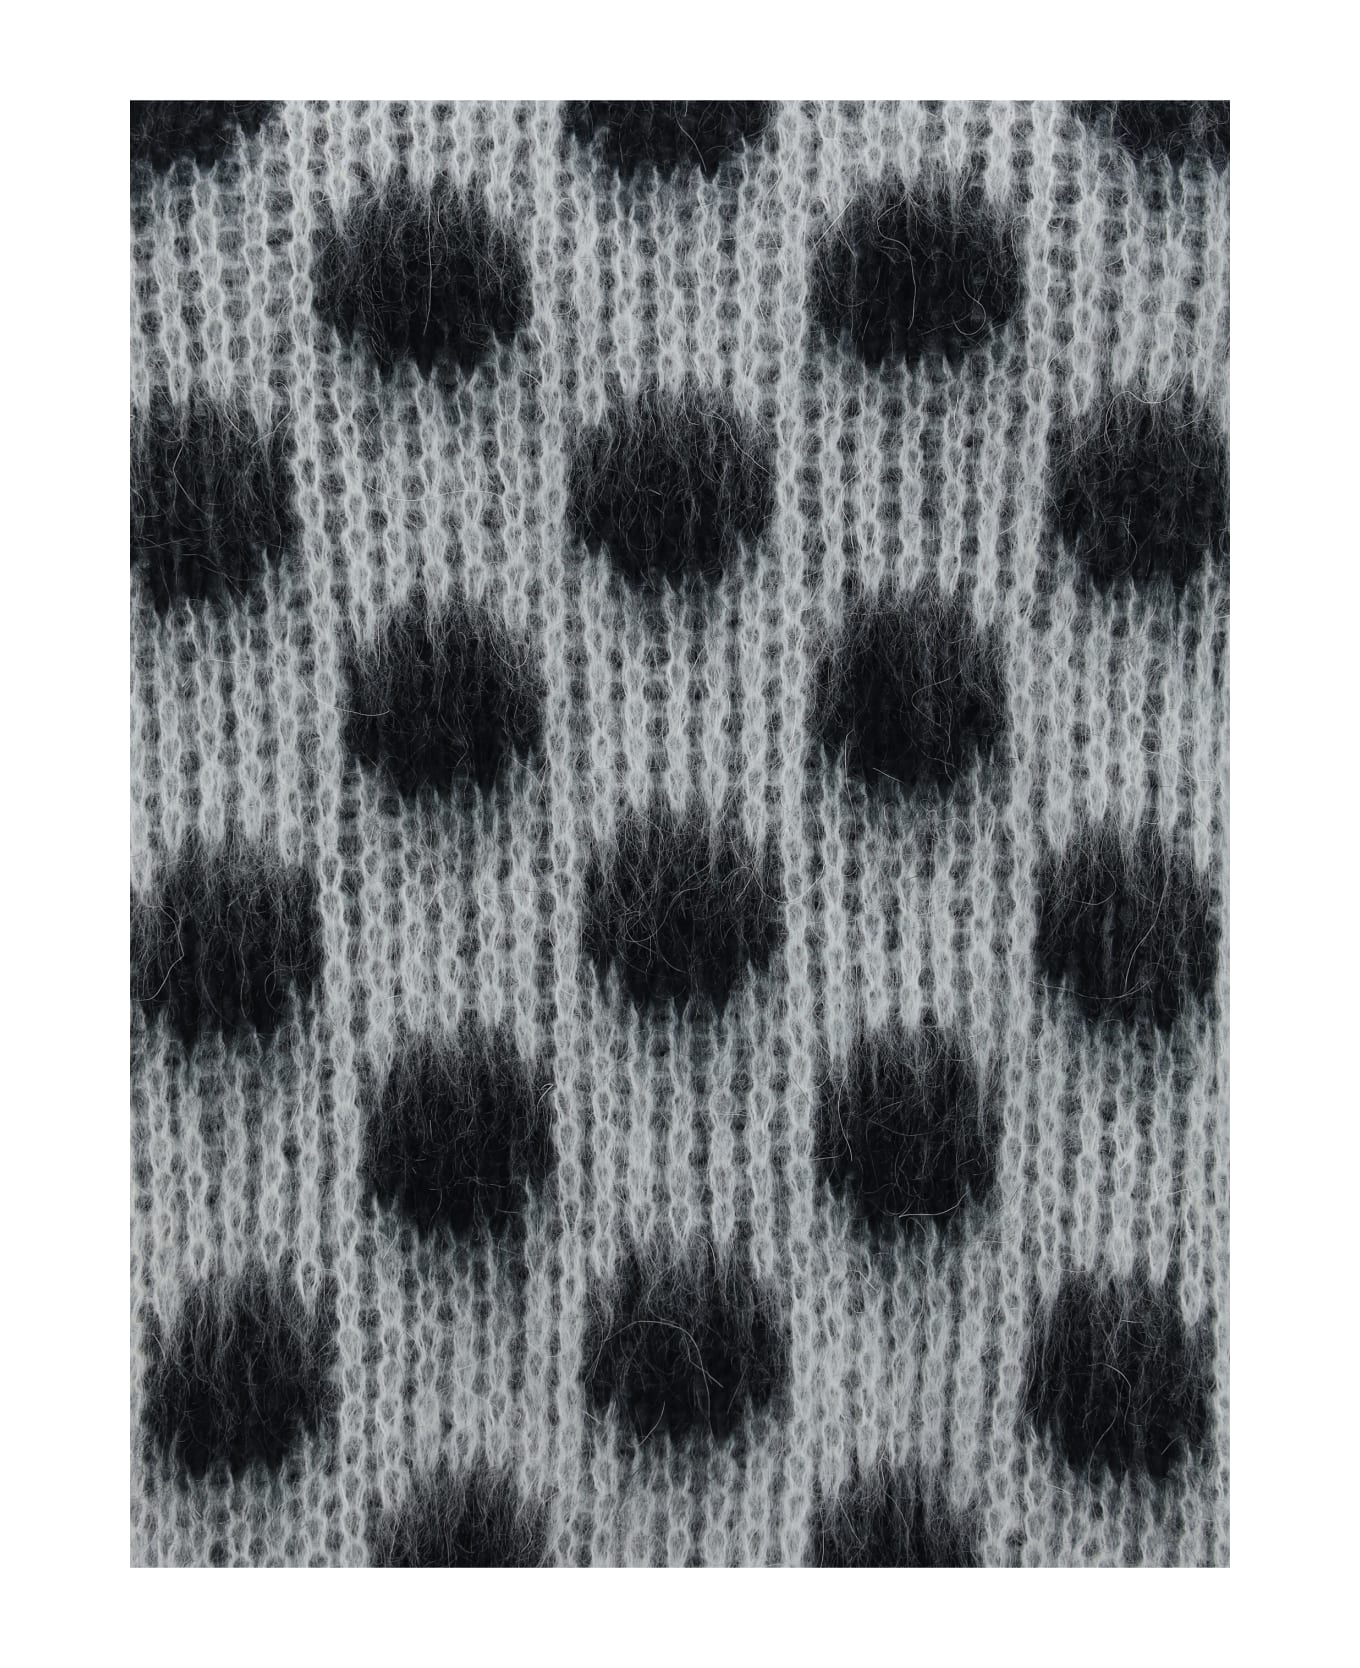 Marni Sweater - Dow01 ニットウェア